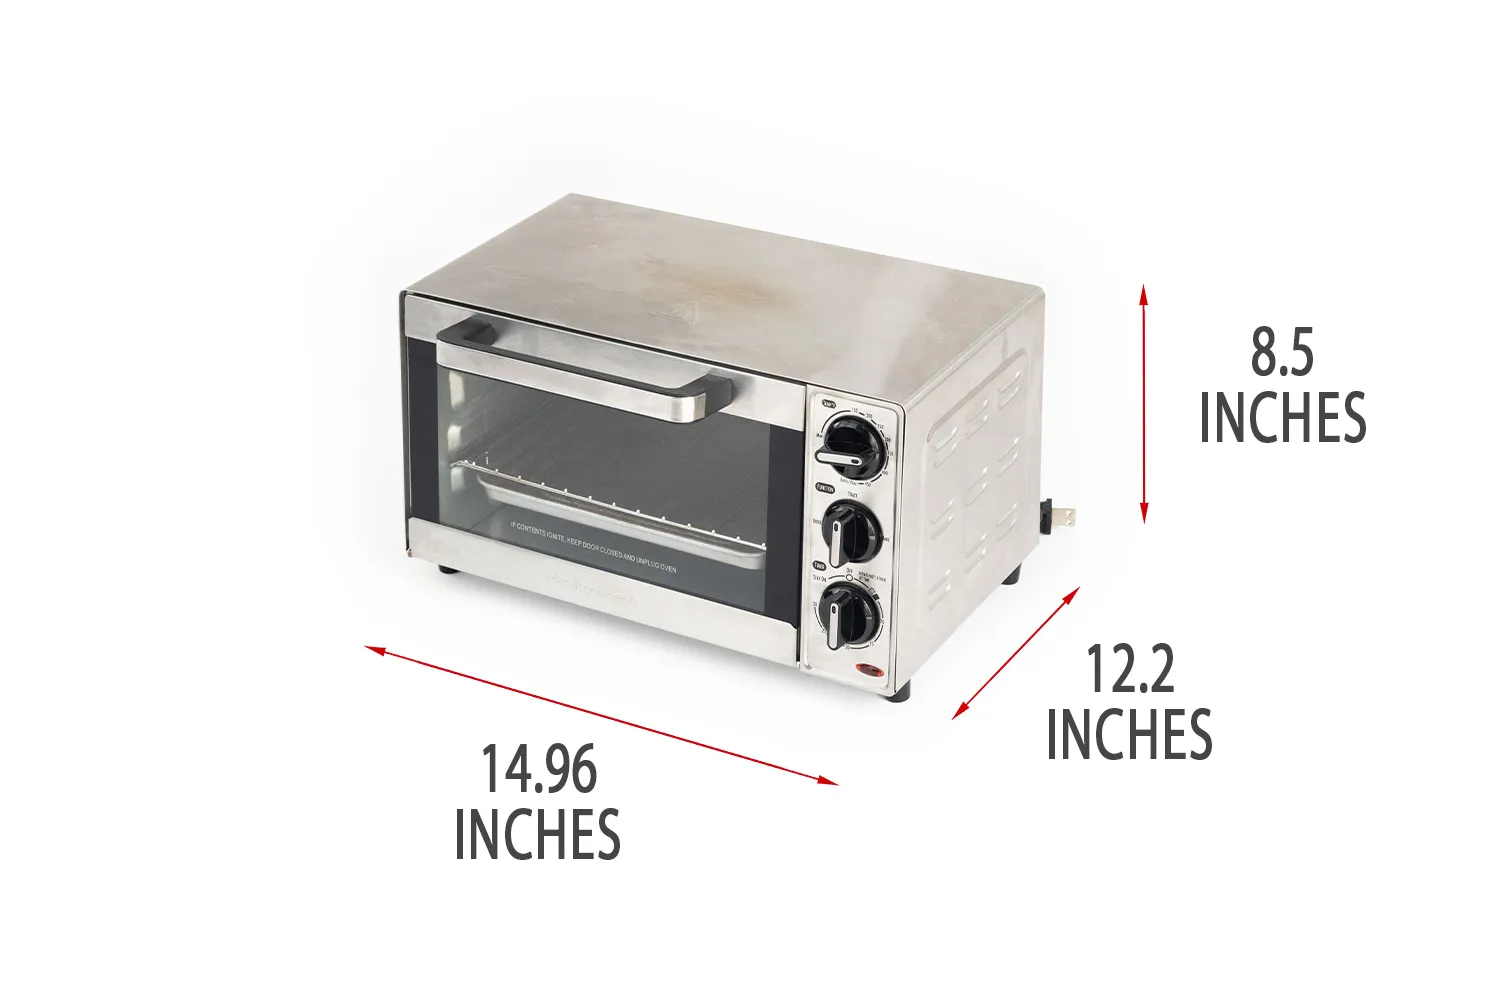 Hamilton Beach Countertop Toaster Oven & Pizza Maker, Large 4-Slice  Capactiy